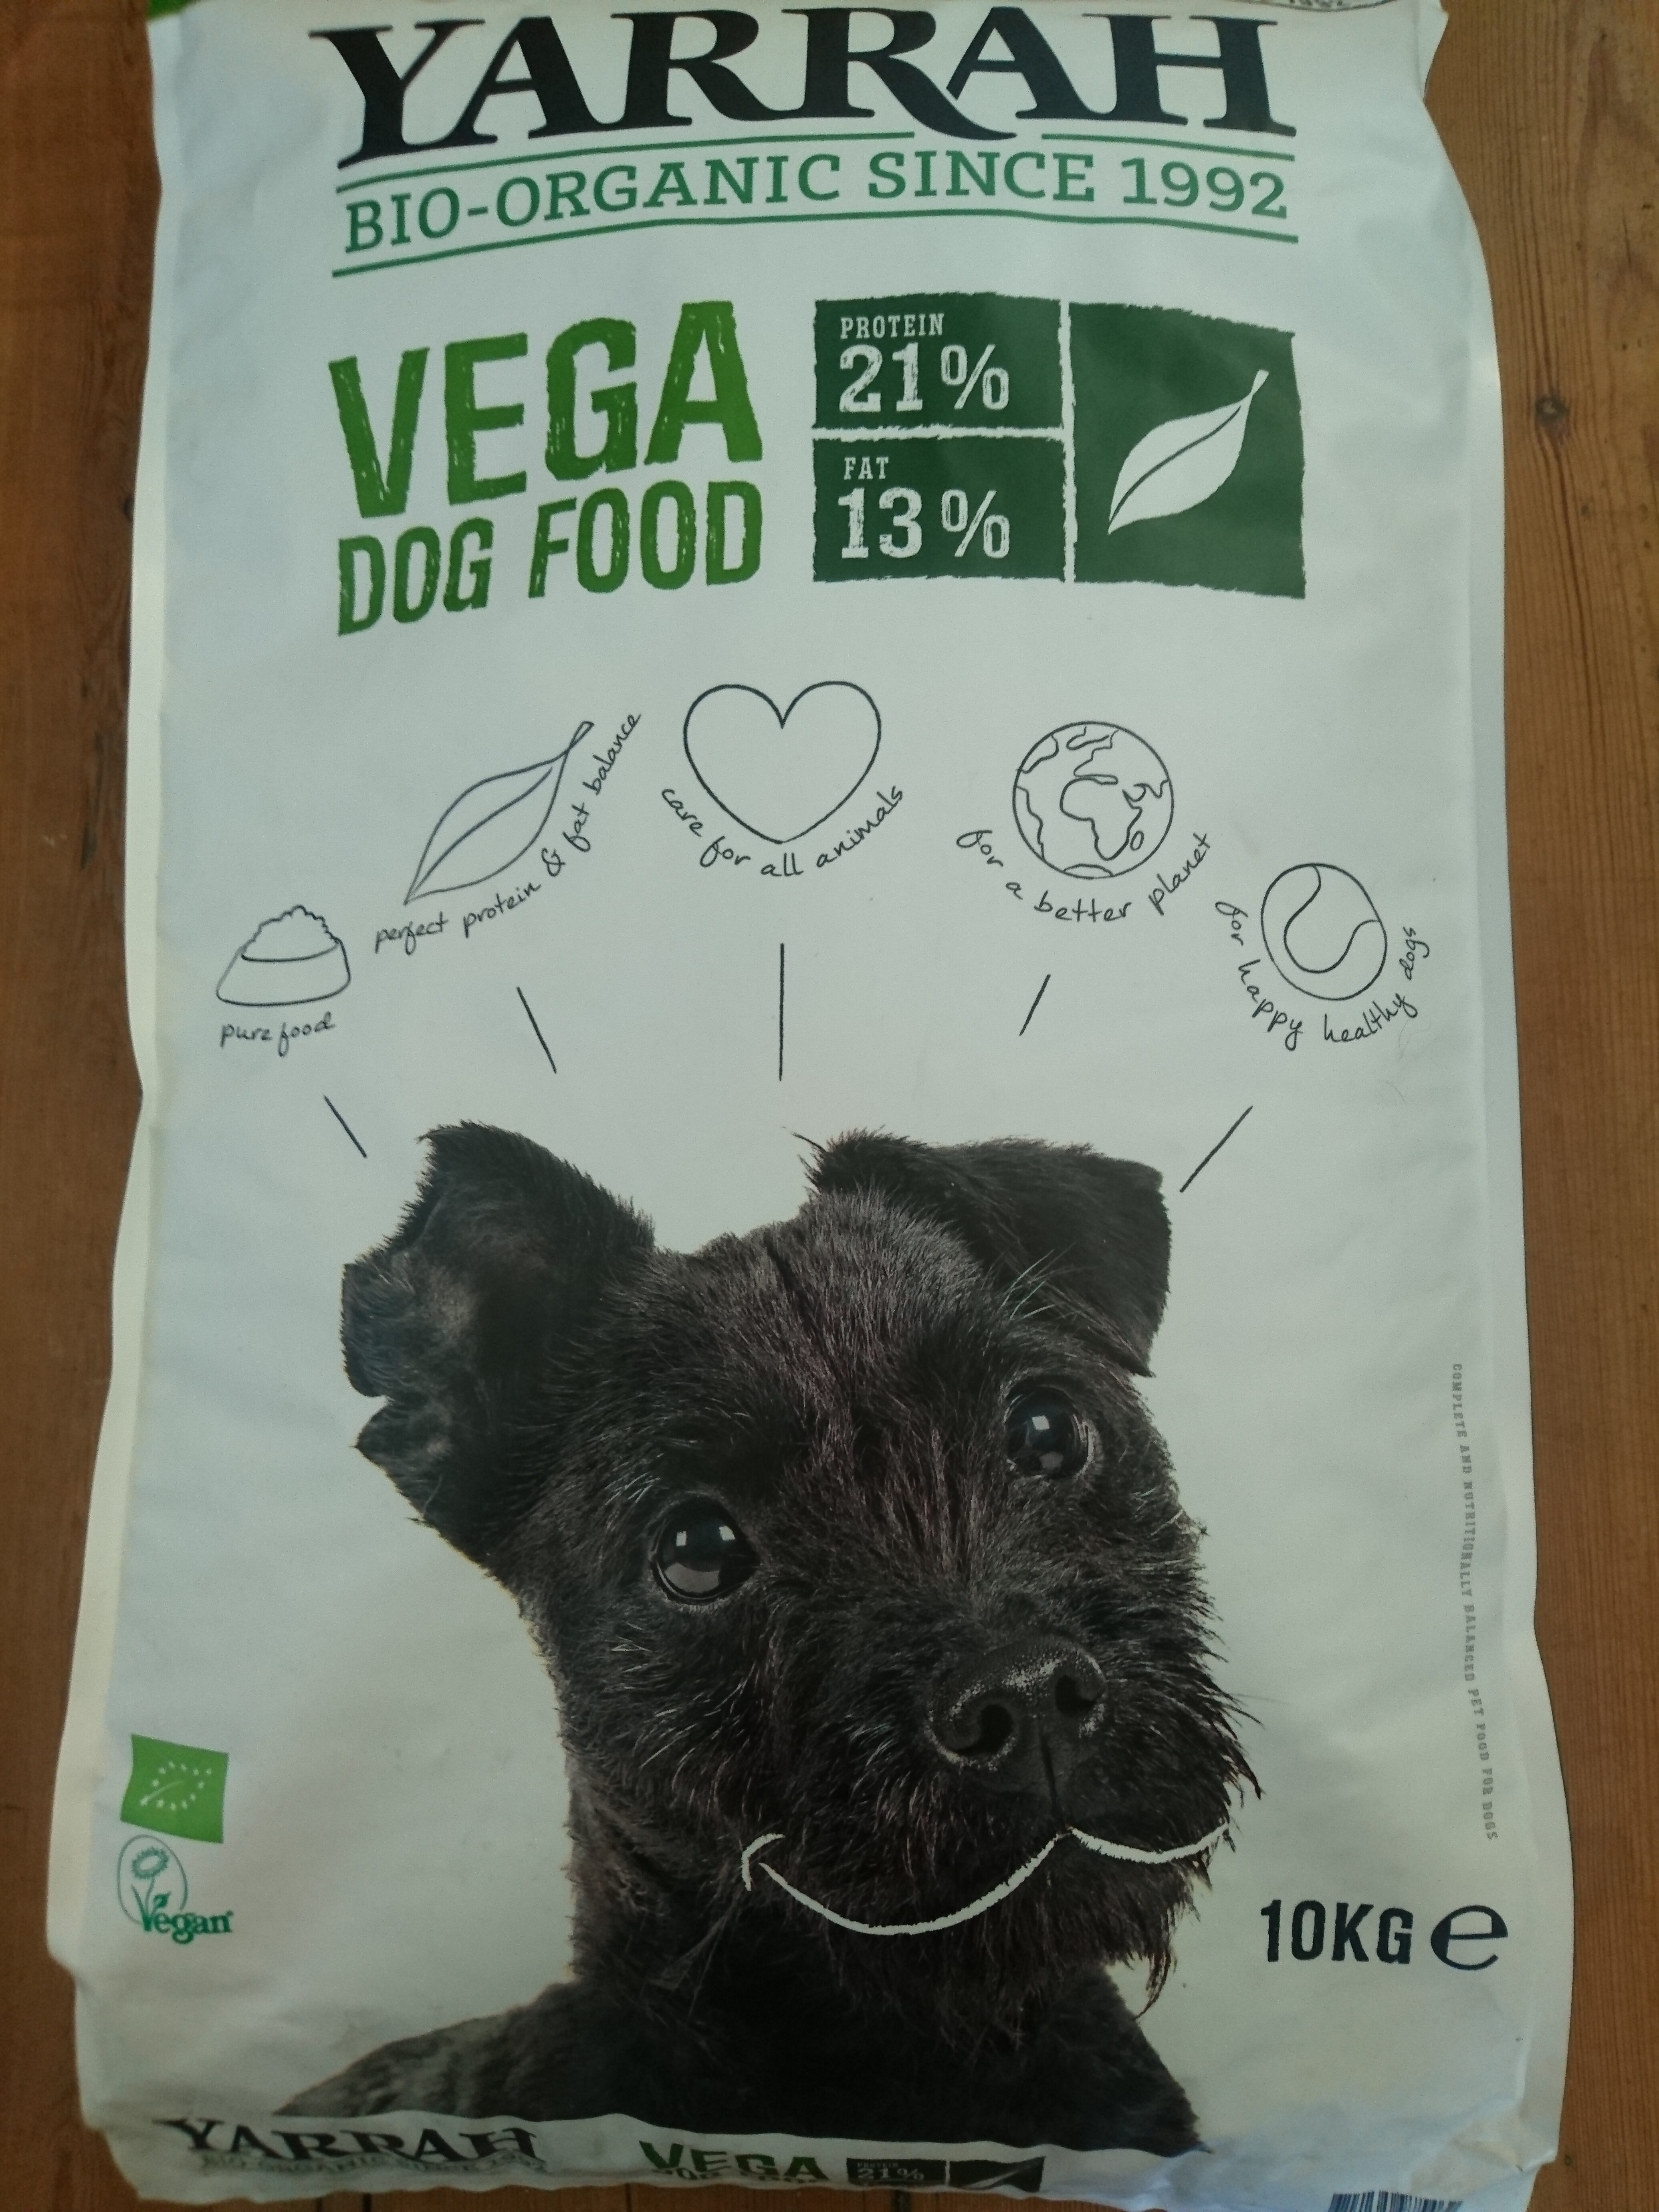 Vega dog food - Product - en